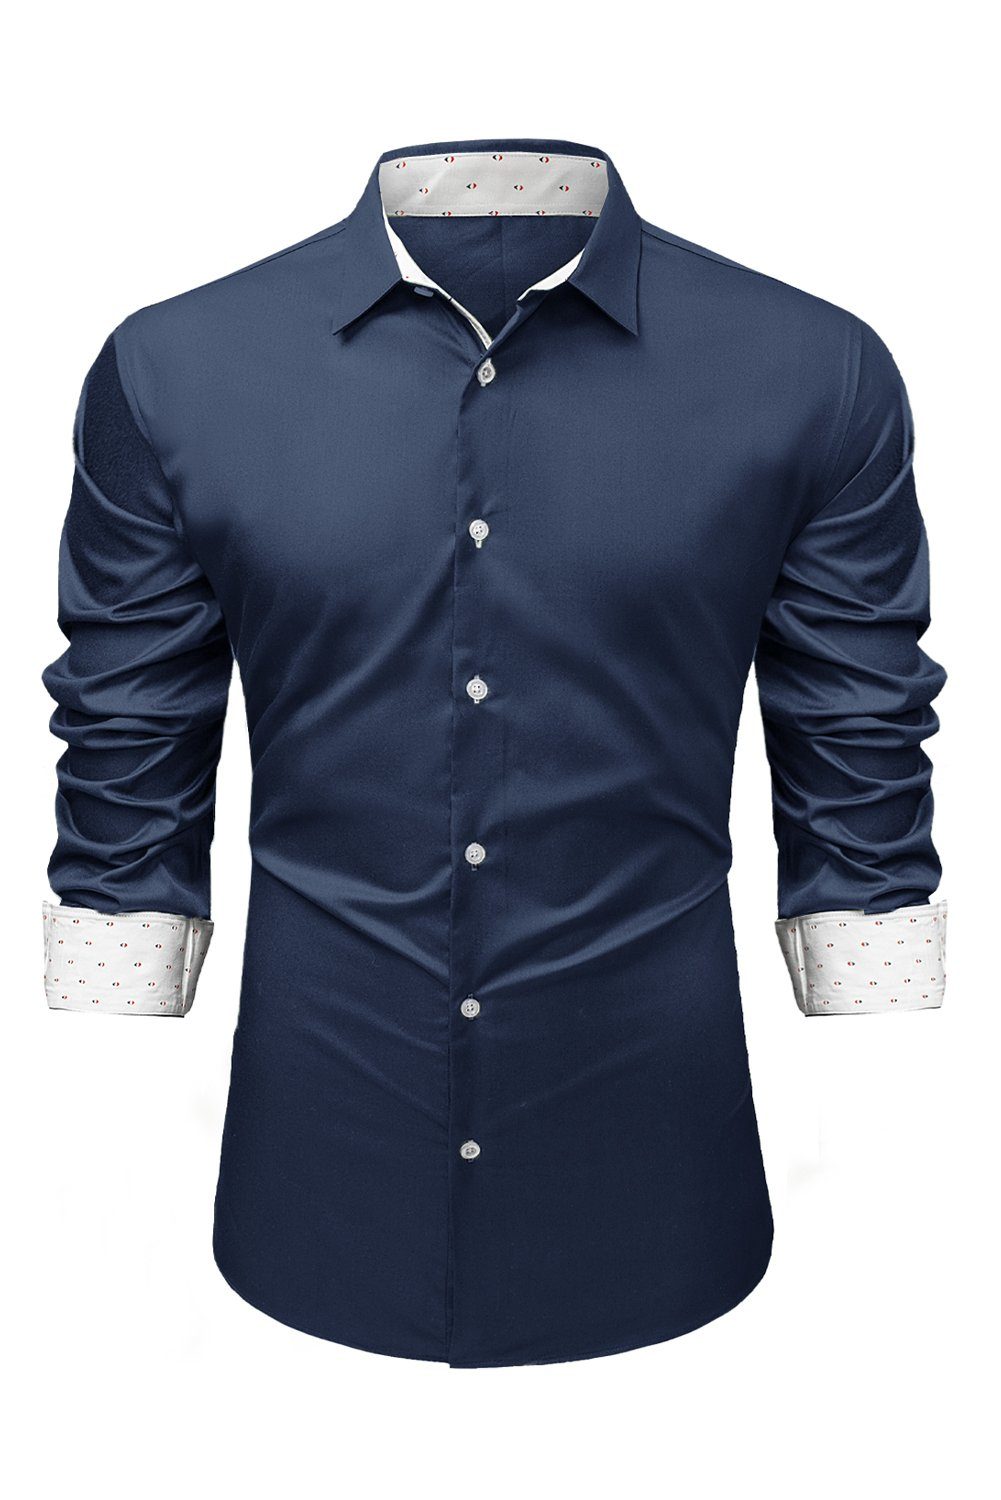 JMIERR Businesshemd Businesshemd Langarm Freizeithemd Herrenhemden Casual Für Anzug S-2XL Regular Langarm Kentkragen Uni Blau